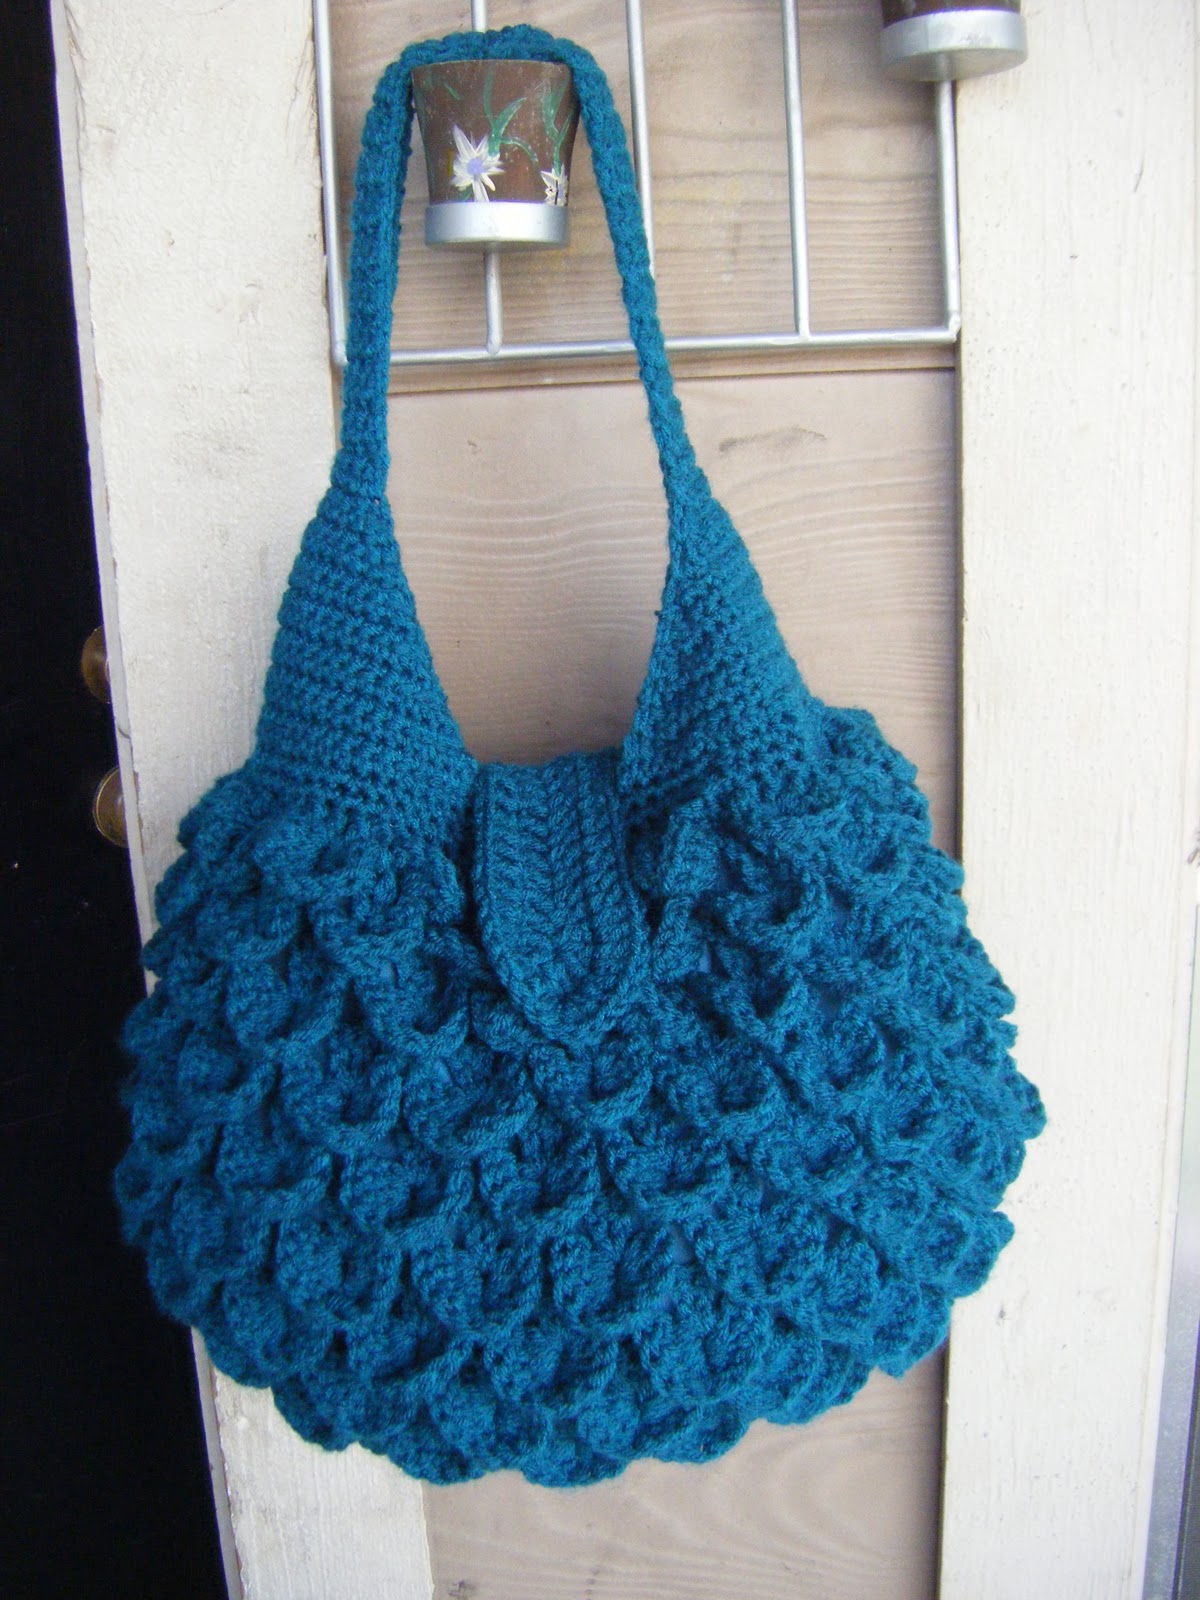 Striped Crochet Bag - Free Pattern for a Striped Crochet Bag